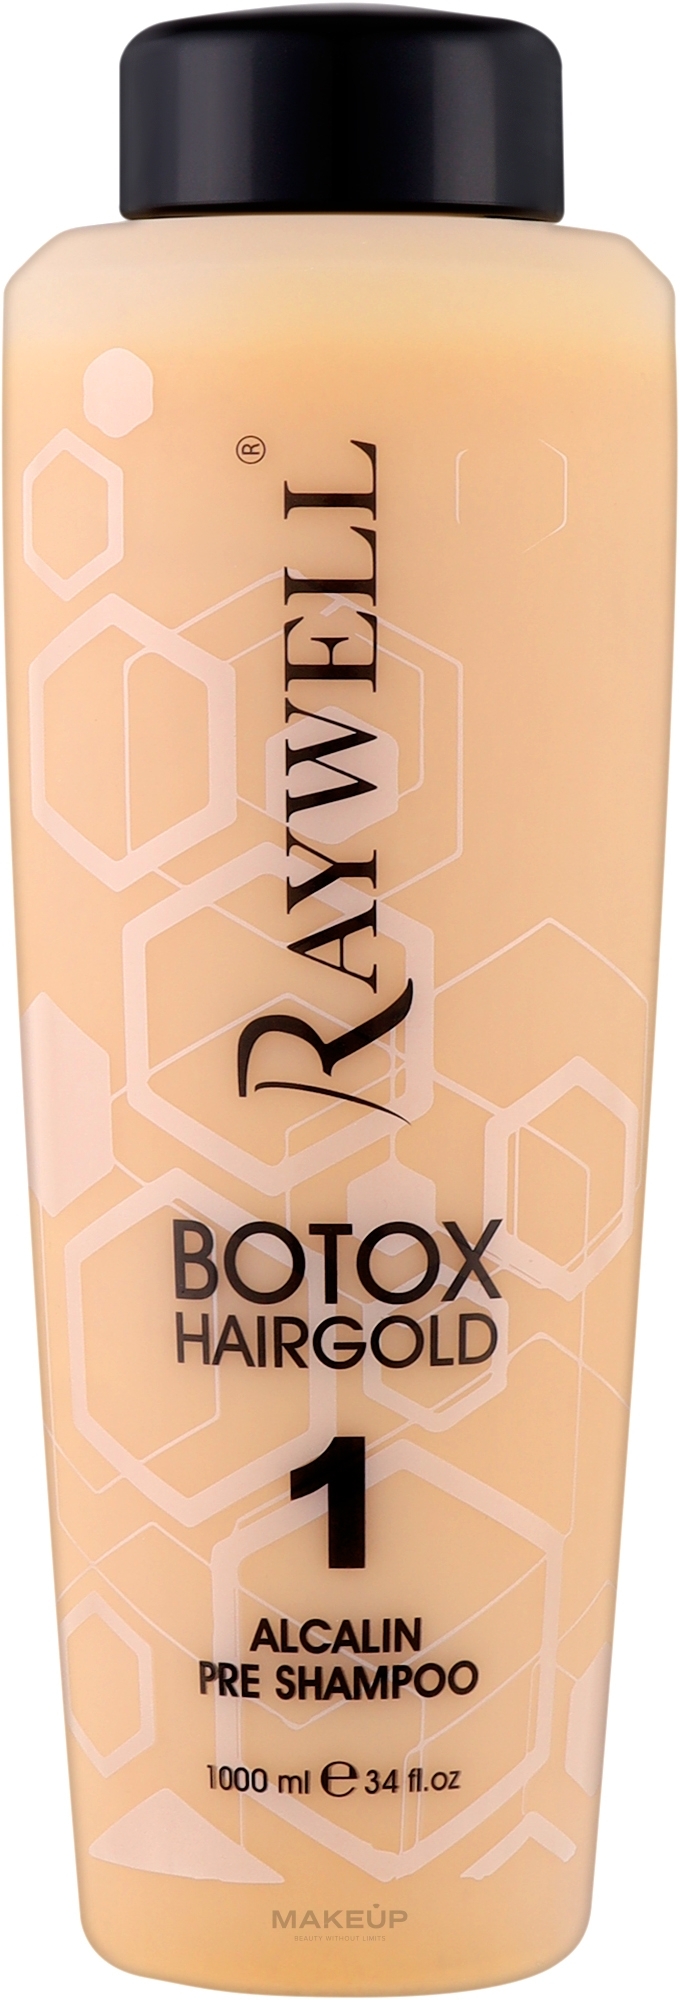 Шампунь для волос - Raywell Botox Hairgold 1 Alcalin Pre Shampoo — фото 1000ml